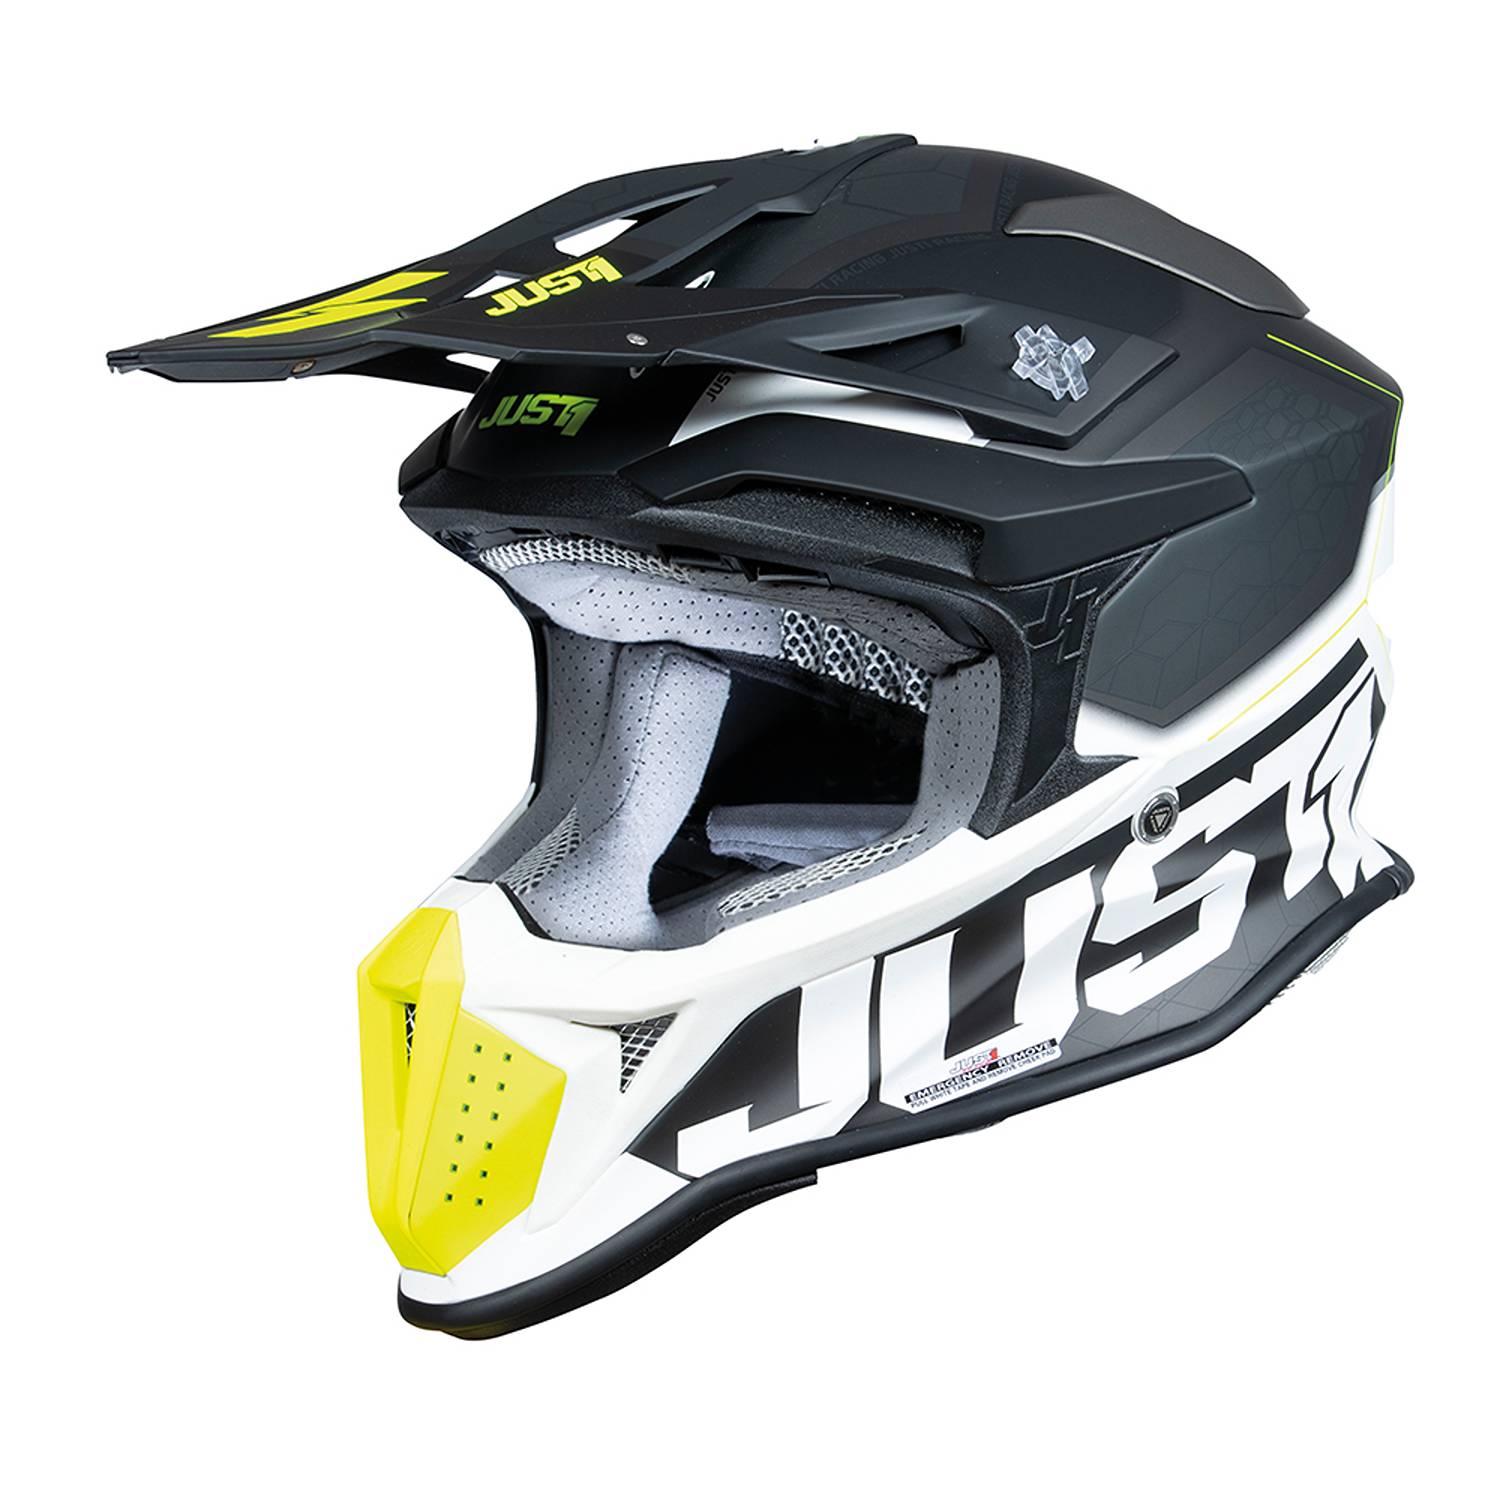 Just1 Helmet J-18F Hexa Black Grey Yellow Fluo White Matt Motocross Helmet Size XS